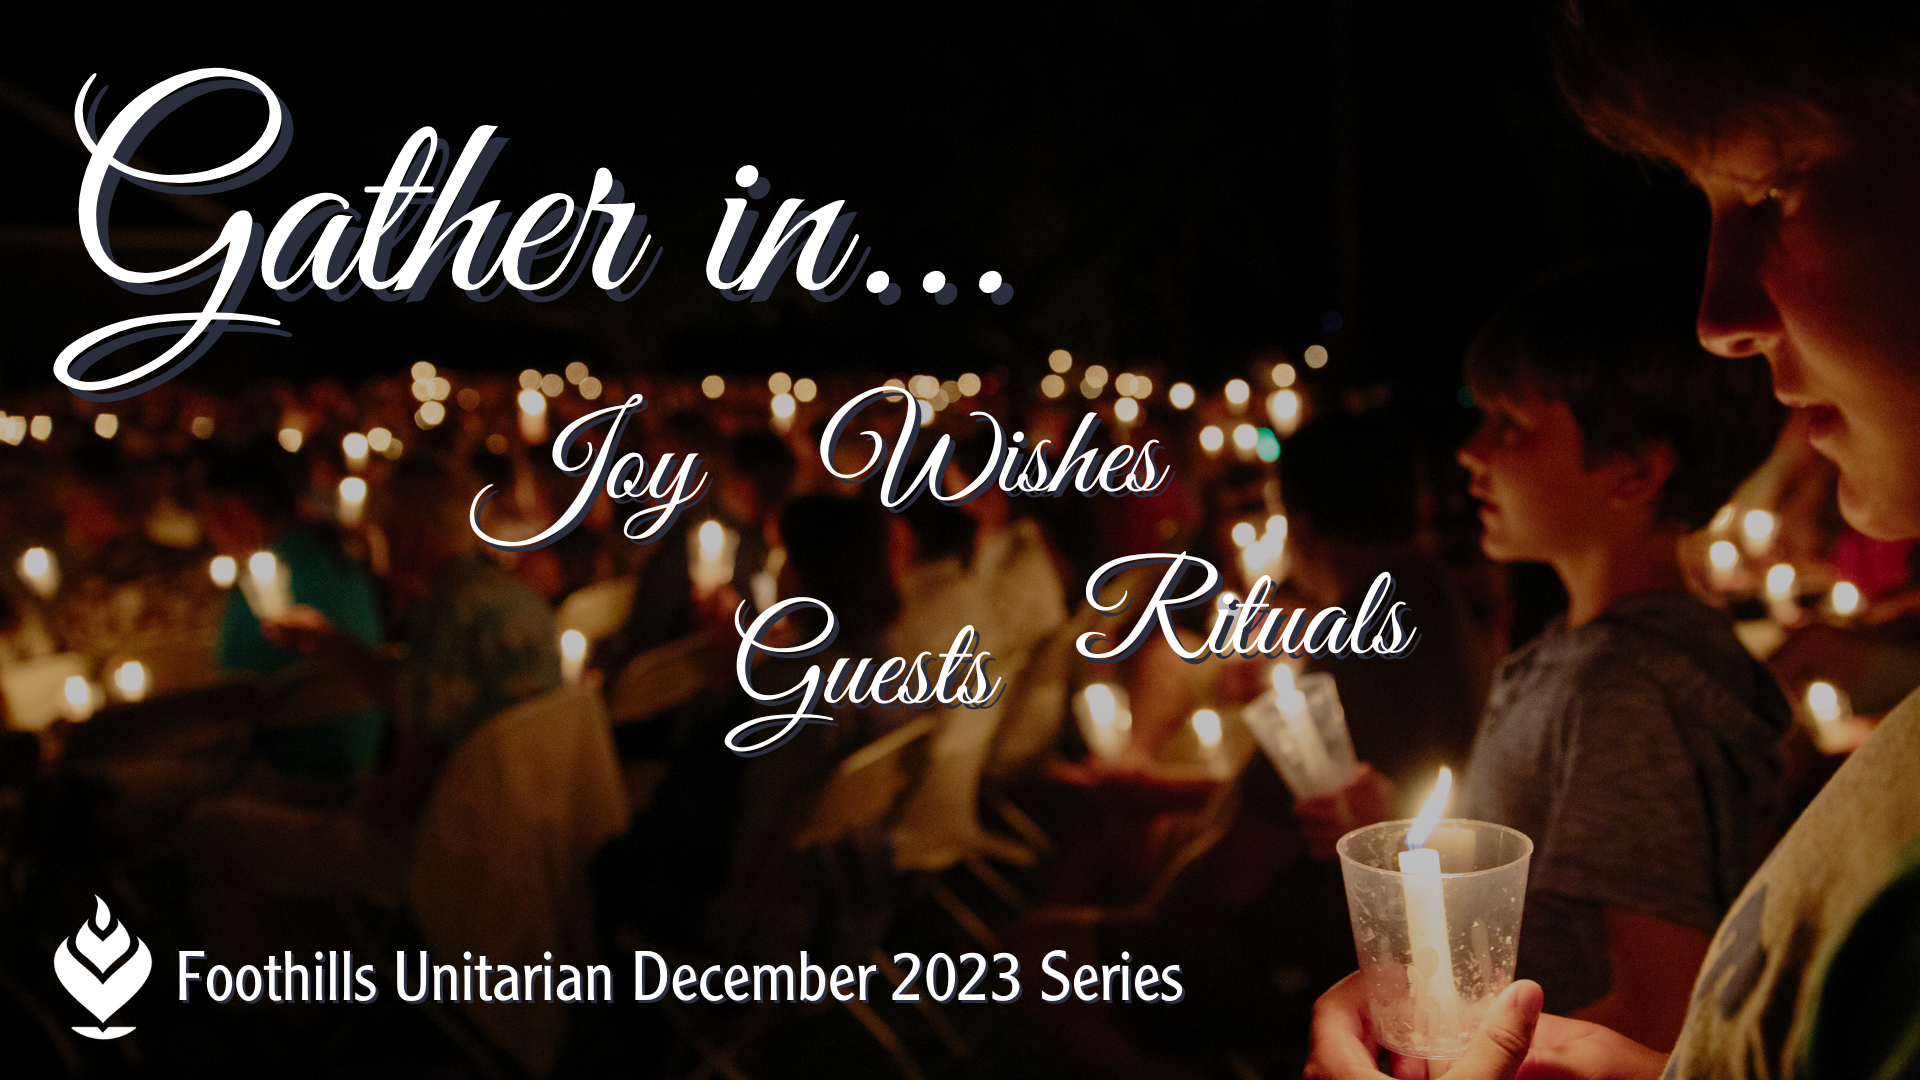 December 2023 Series Invitation: Gather In